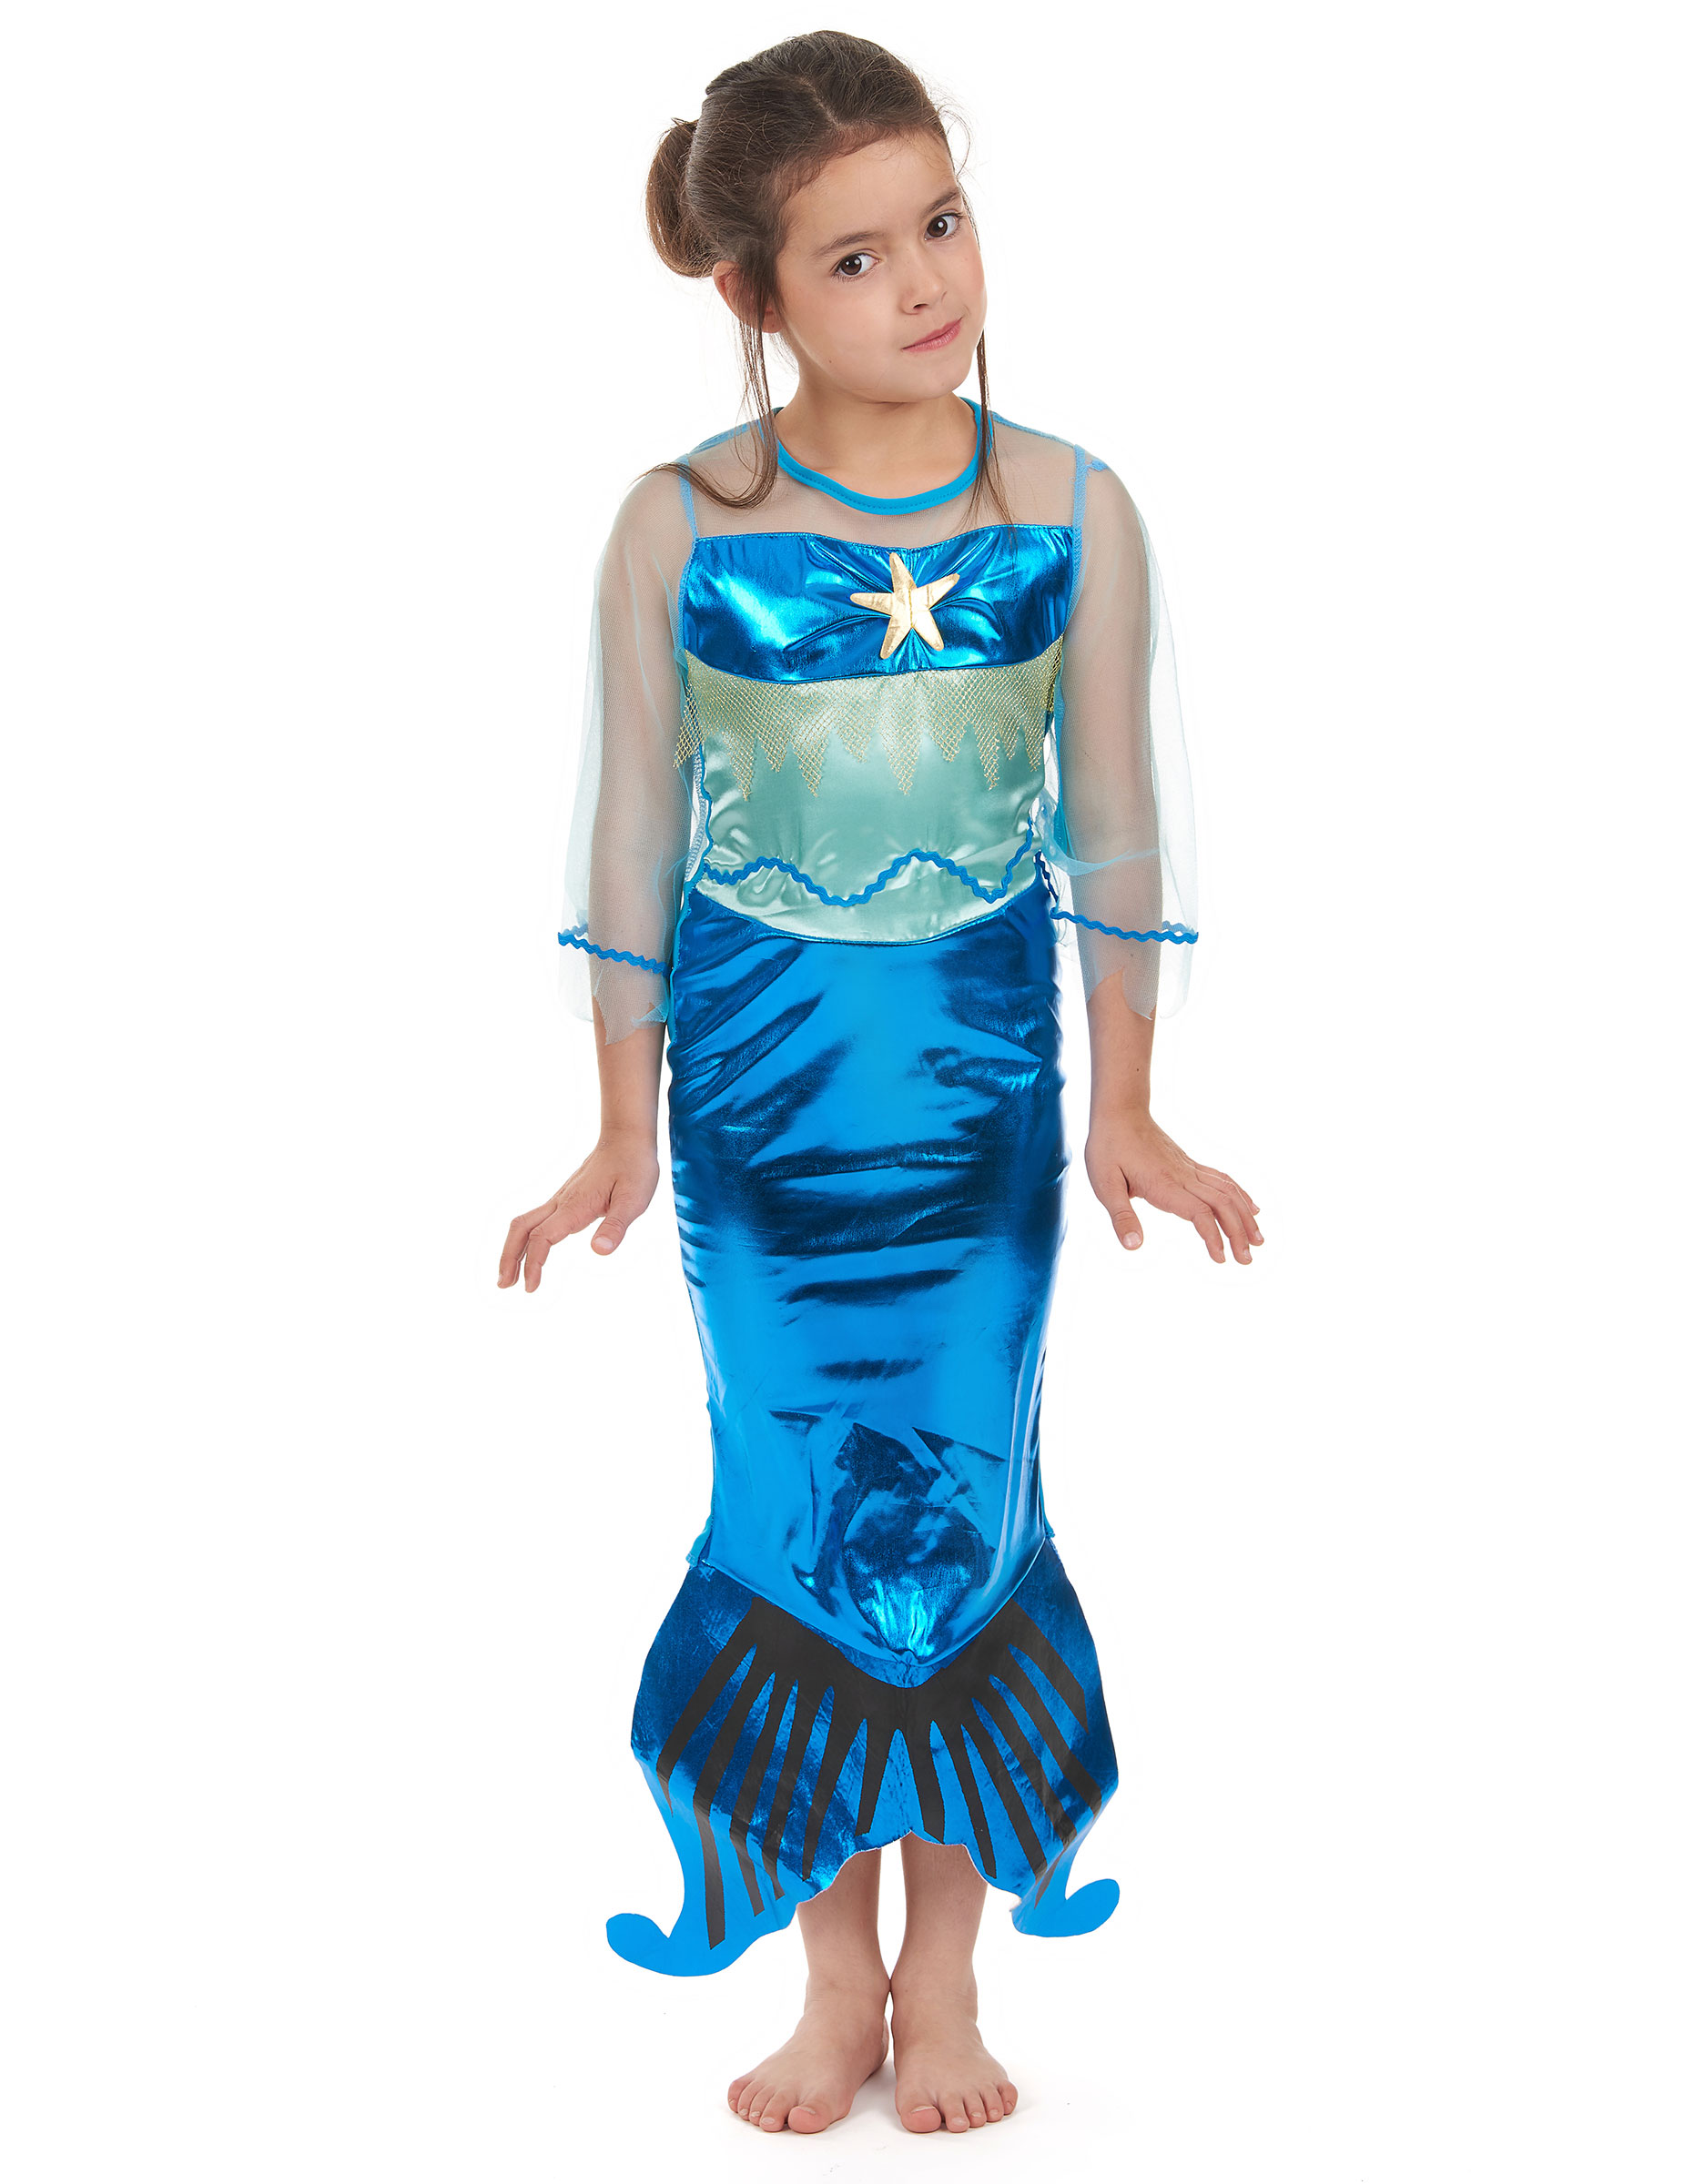 Kleine Meerjungfrau Kinderkostüm Nixe blau-lindgrün von KARNEVAL-MEGASTORE